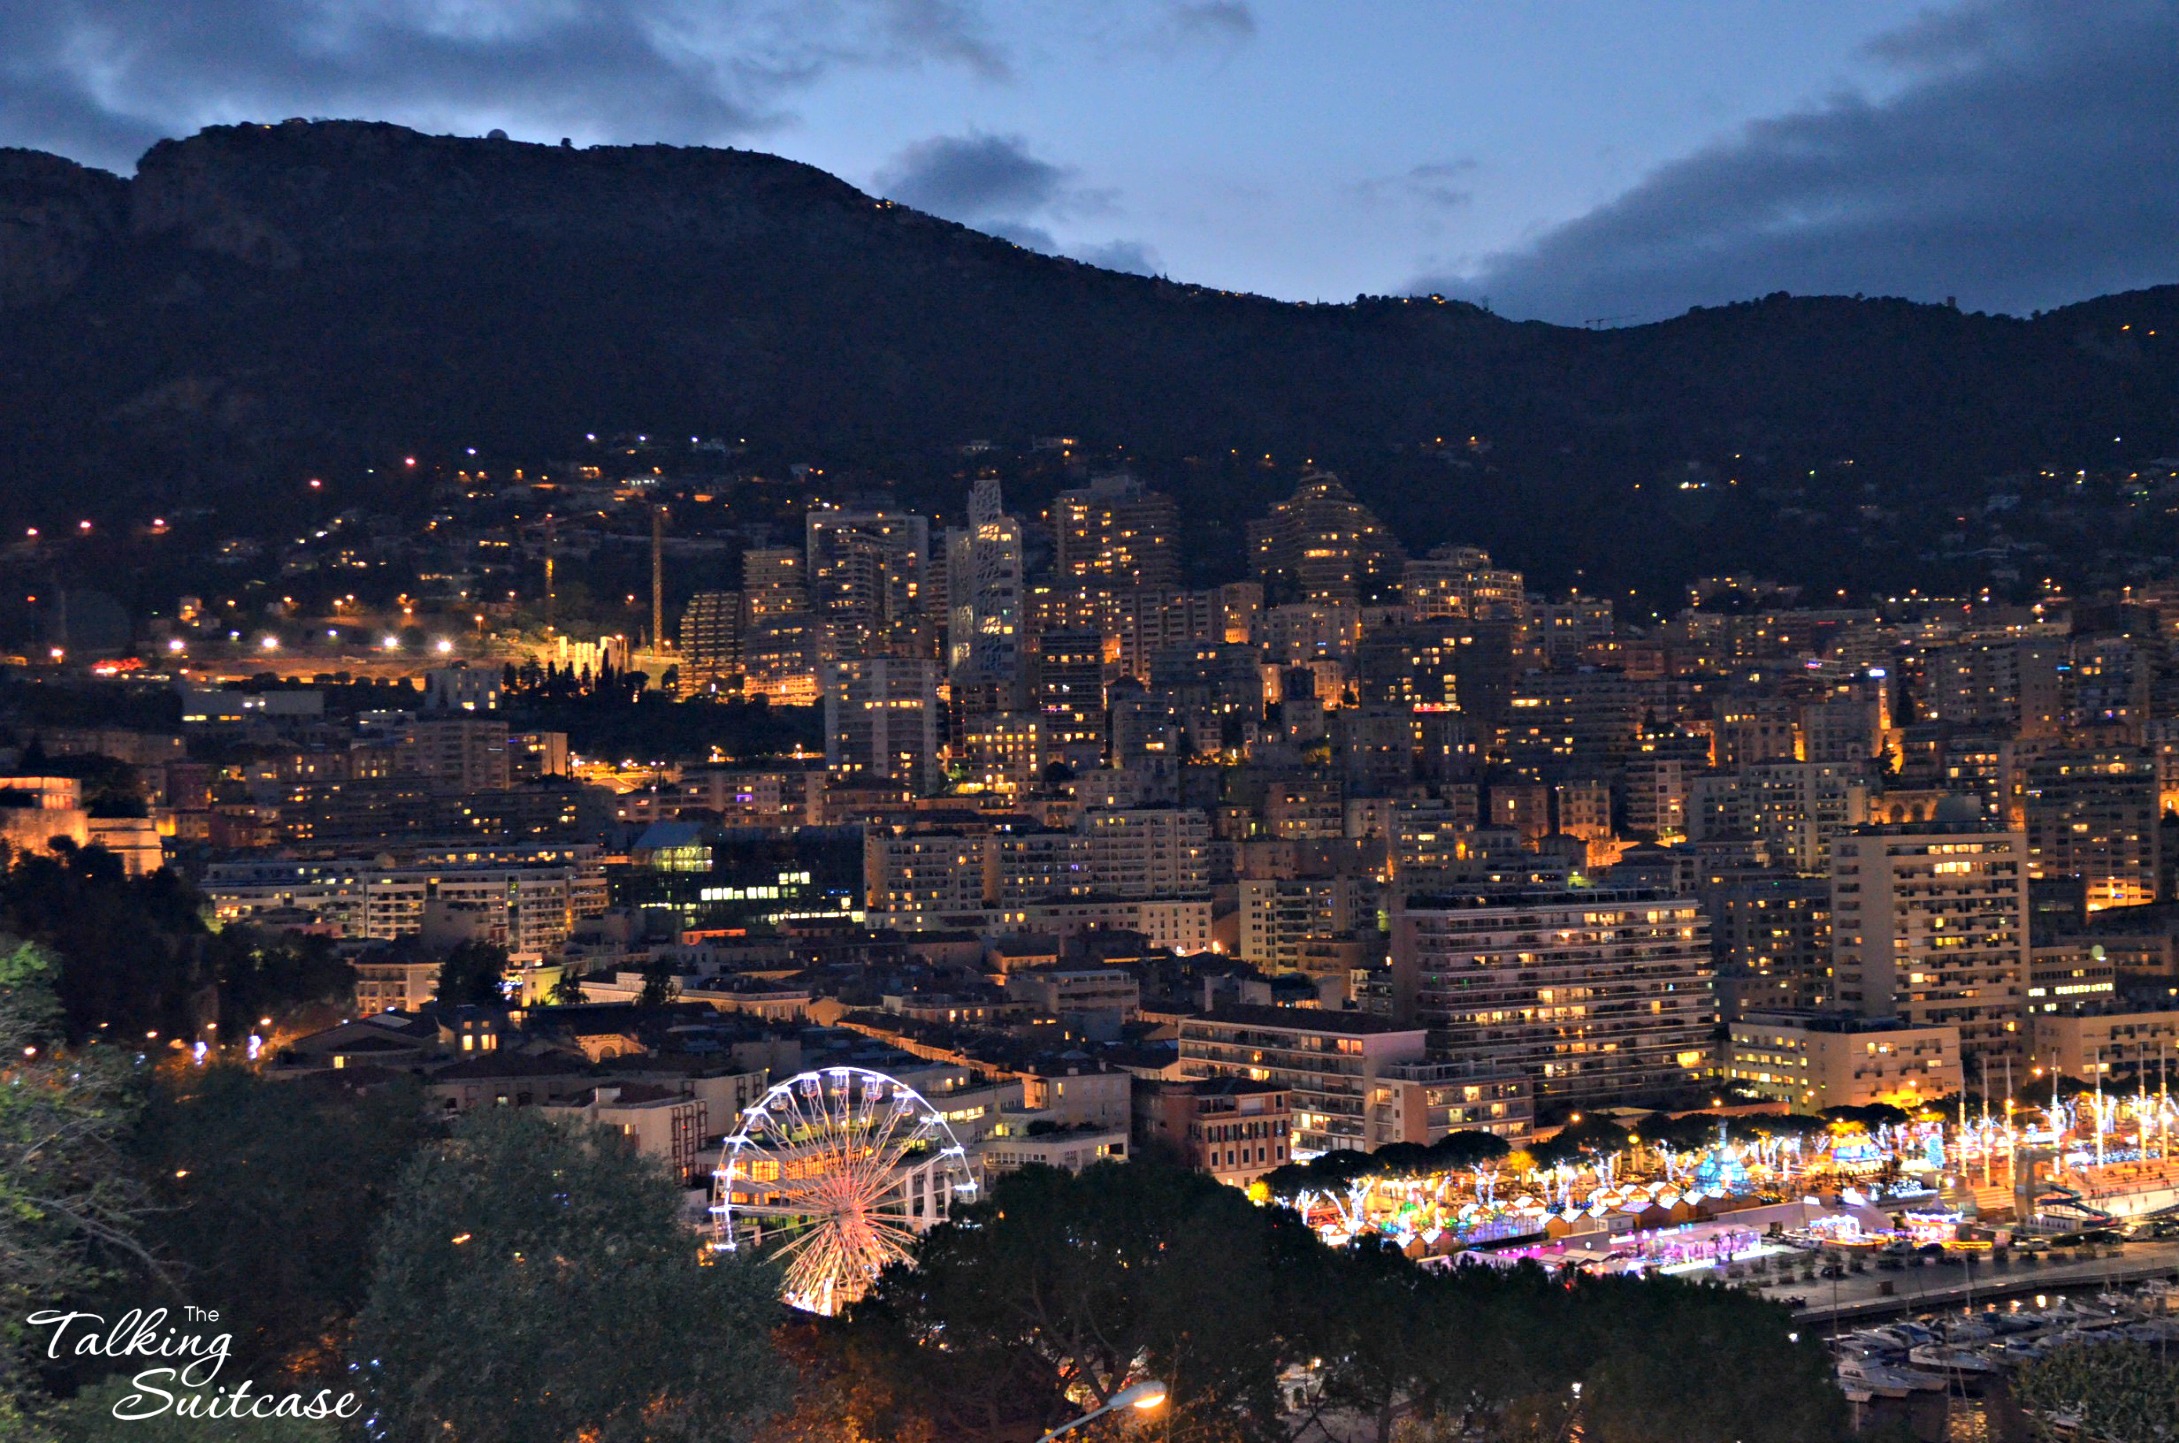 Christmas in Monaco